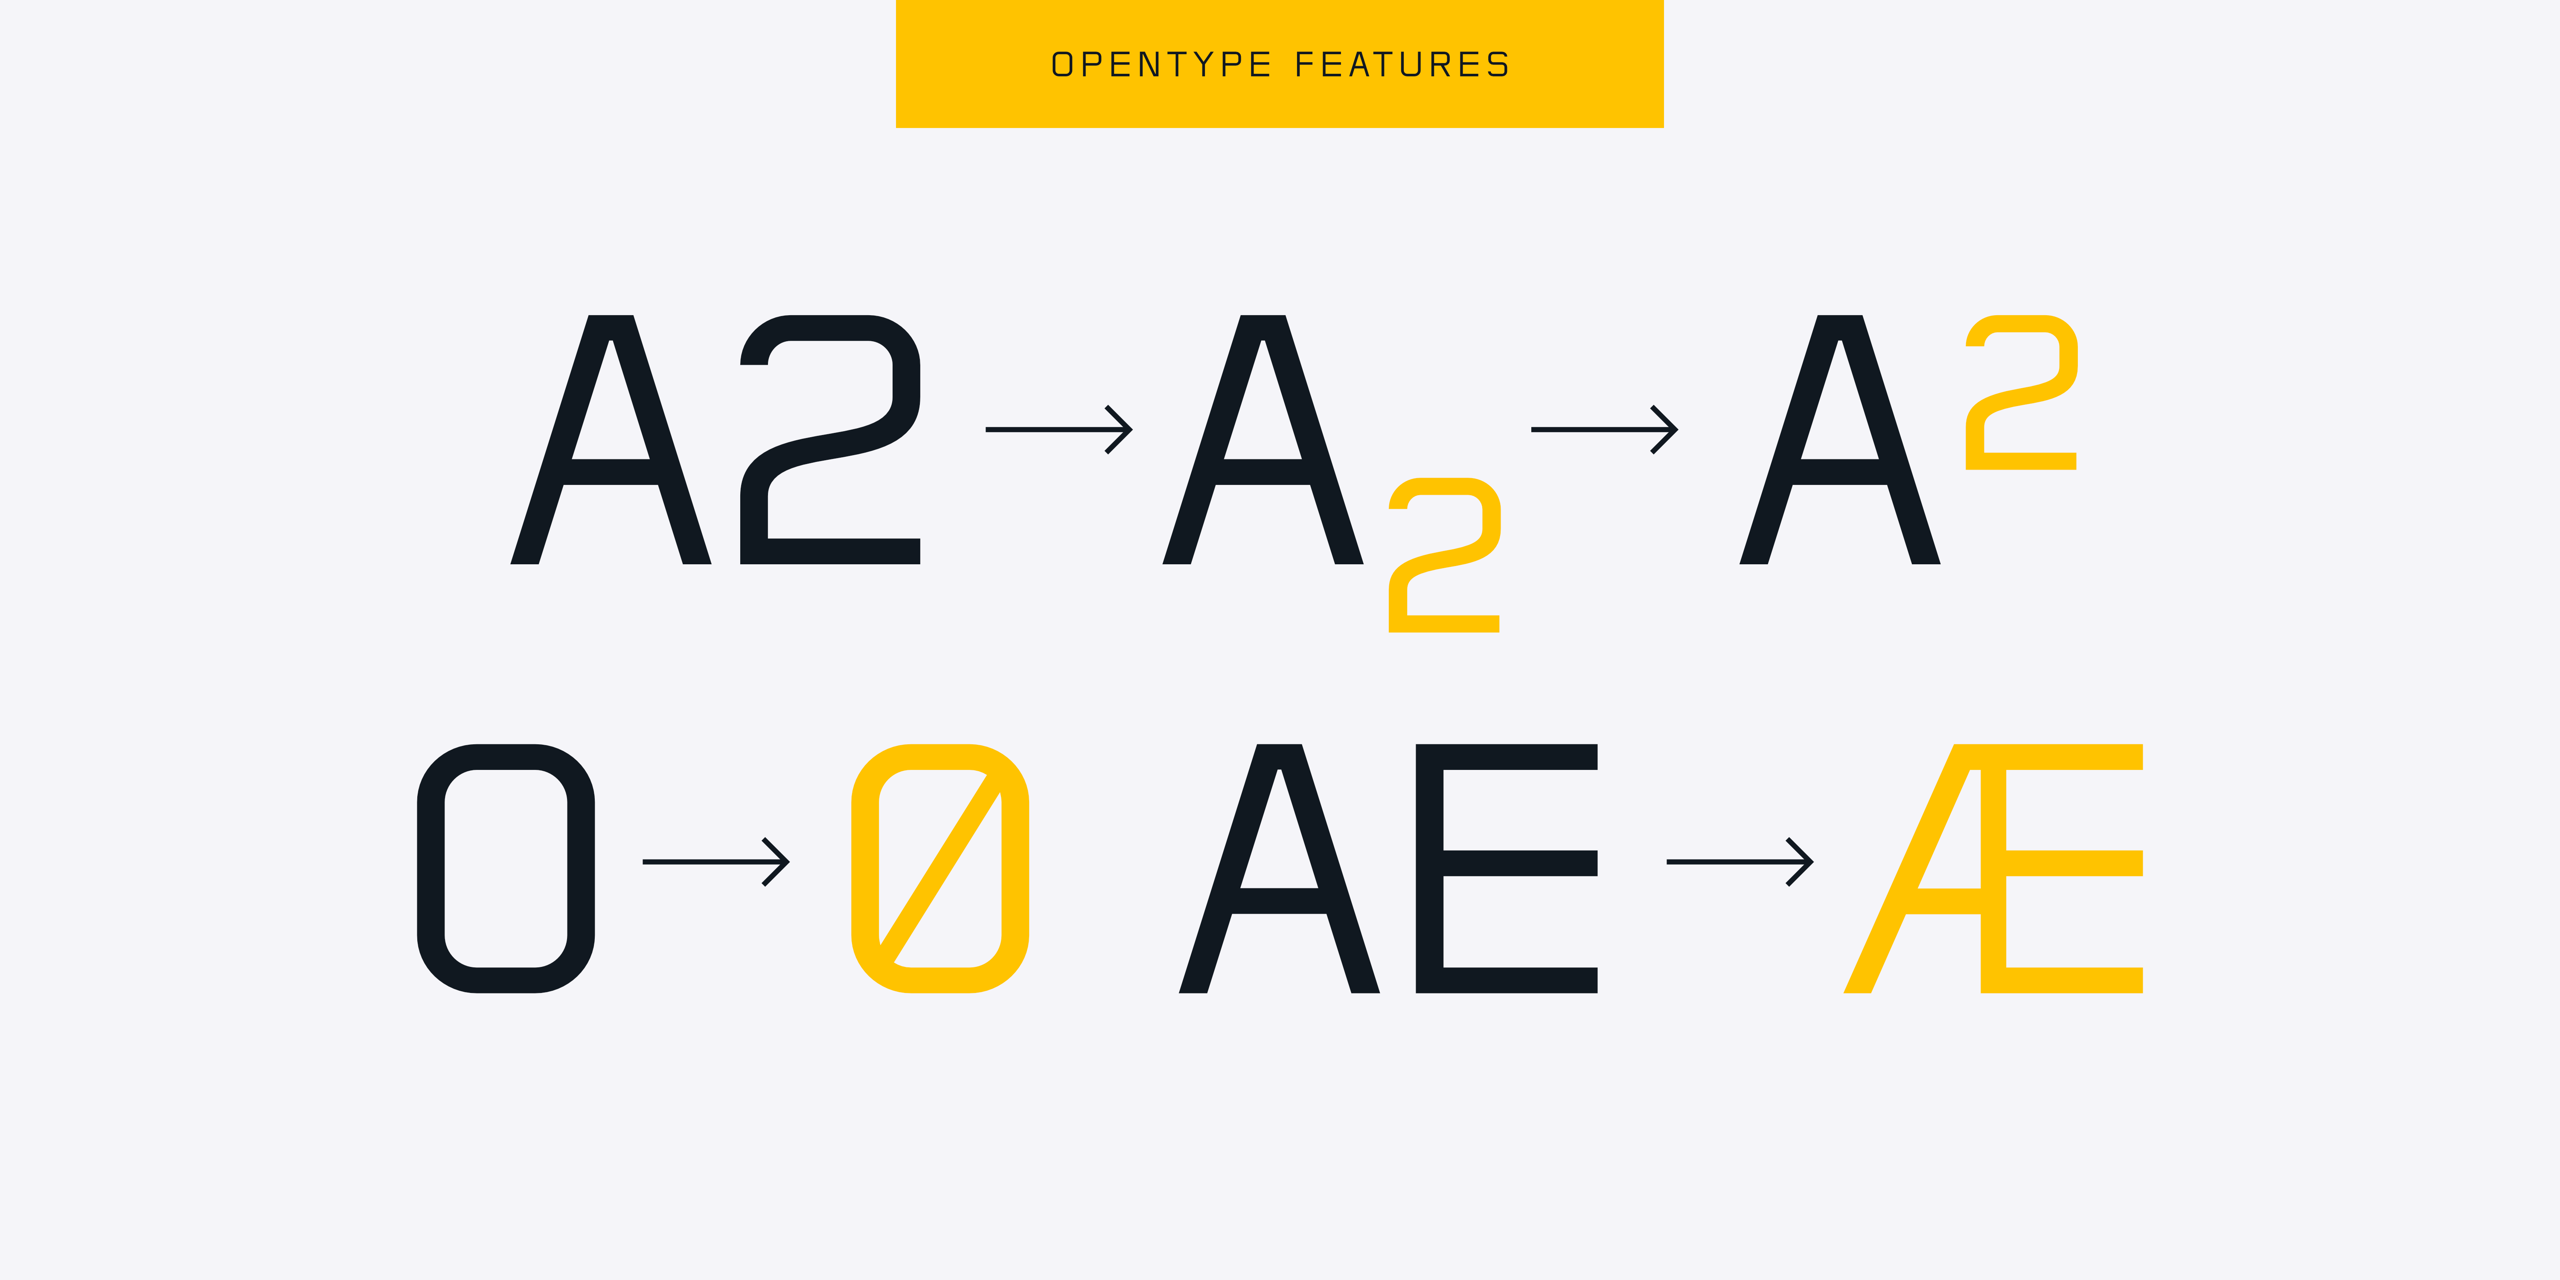 Flat Sans Typeface - OpenType features